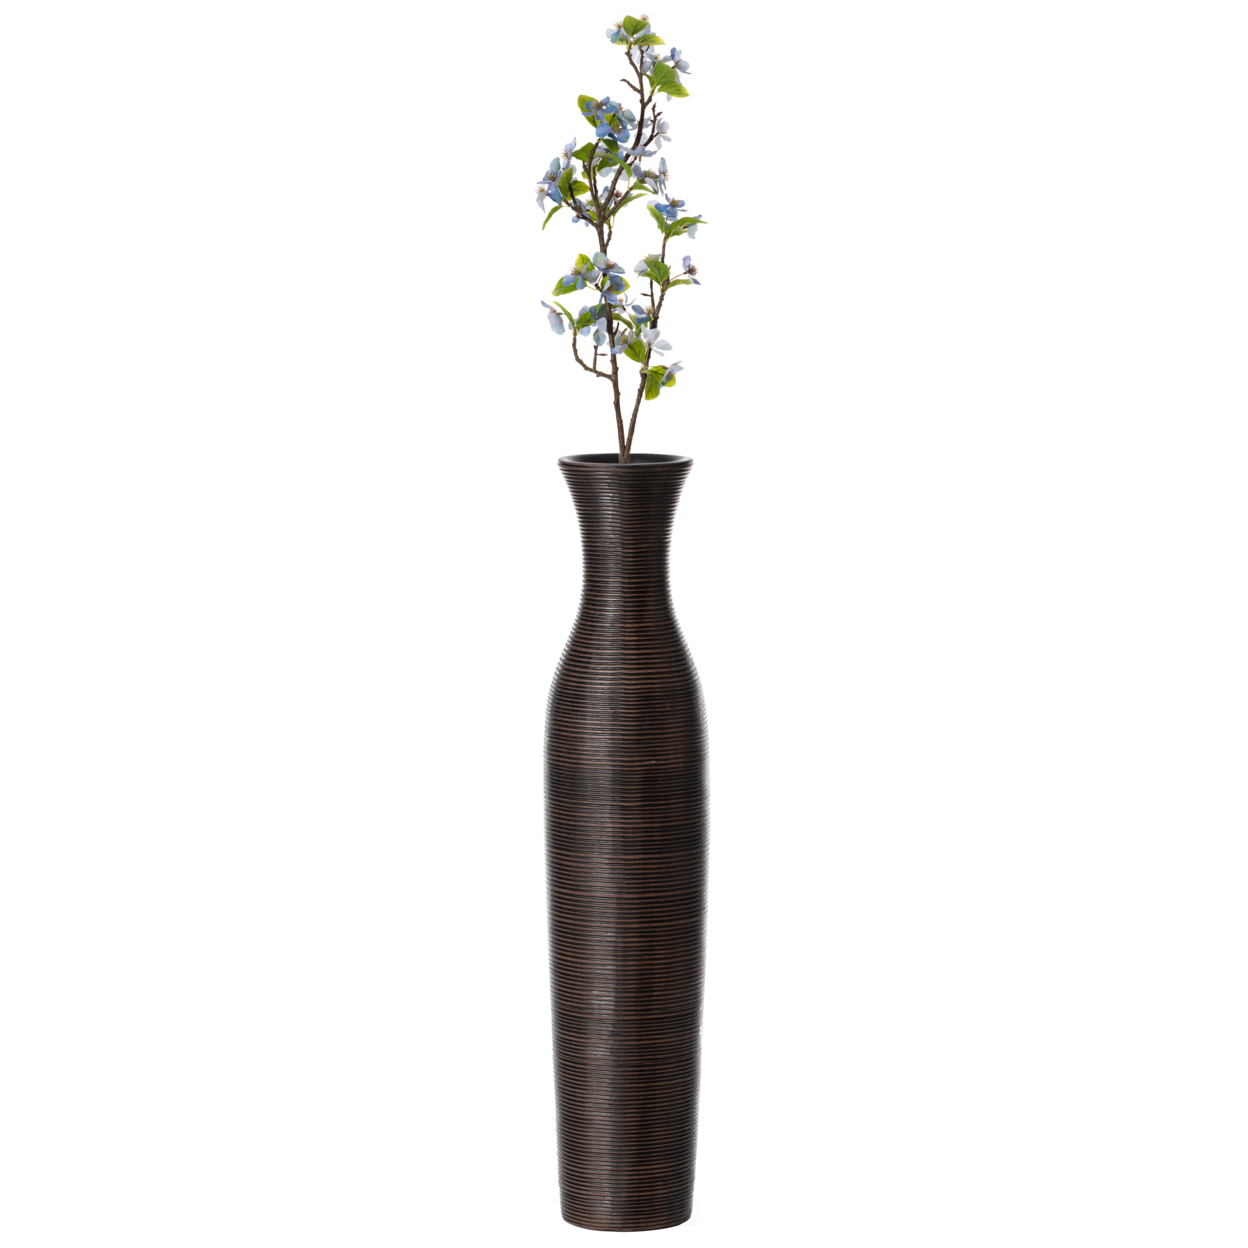 Tall Decorative Modern Ripped Trumpet Design Floor Vase, Brown - Large